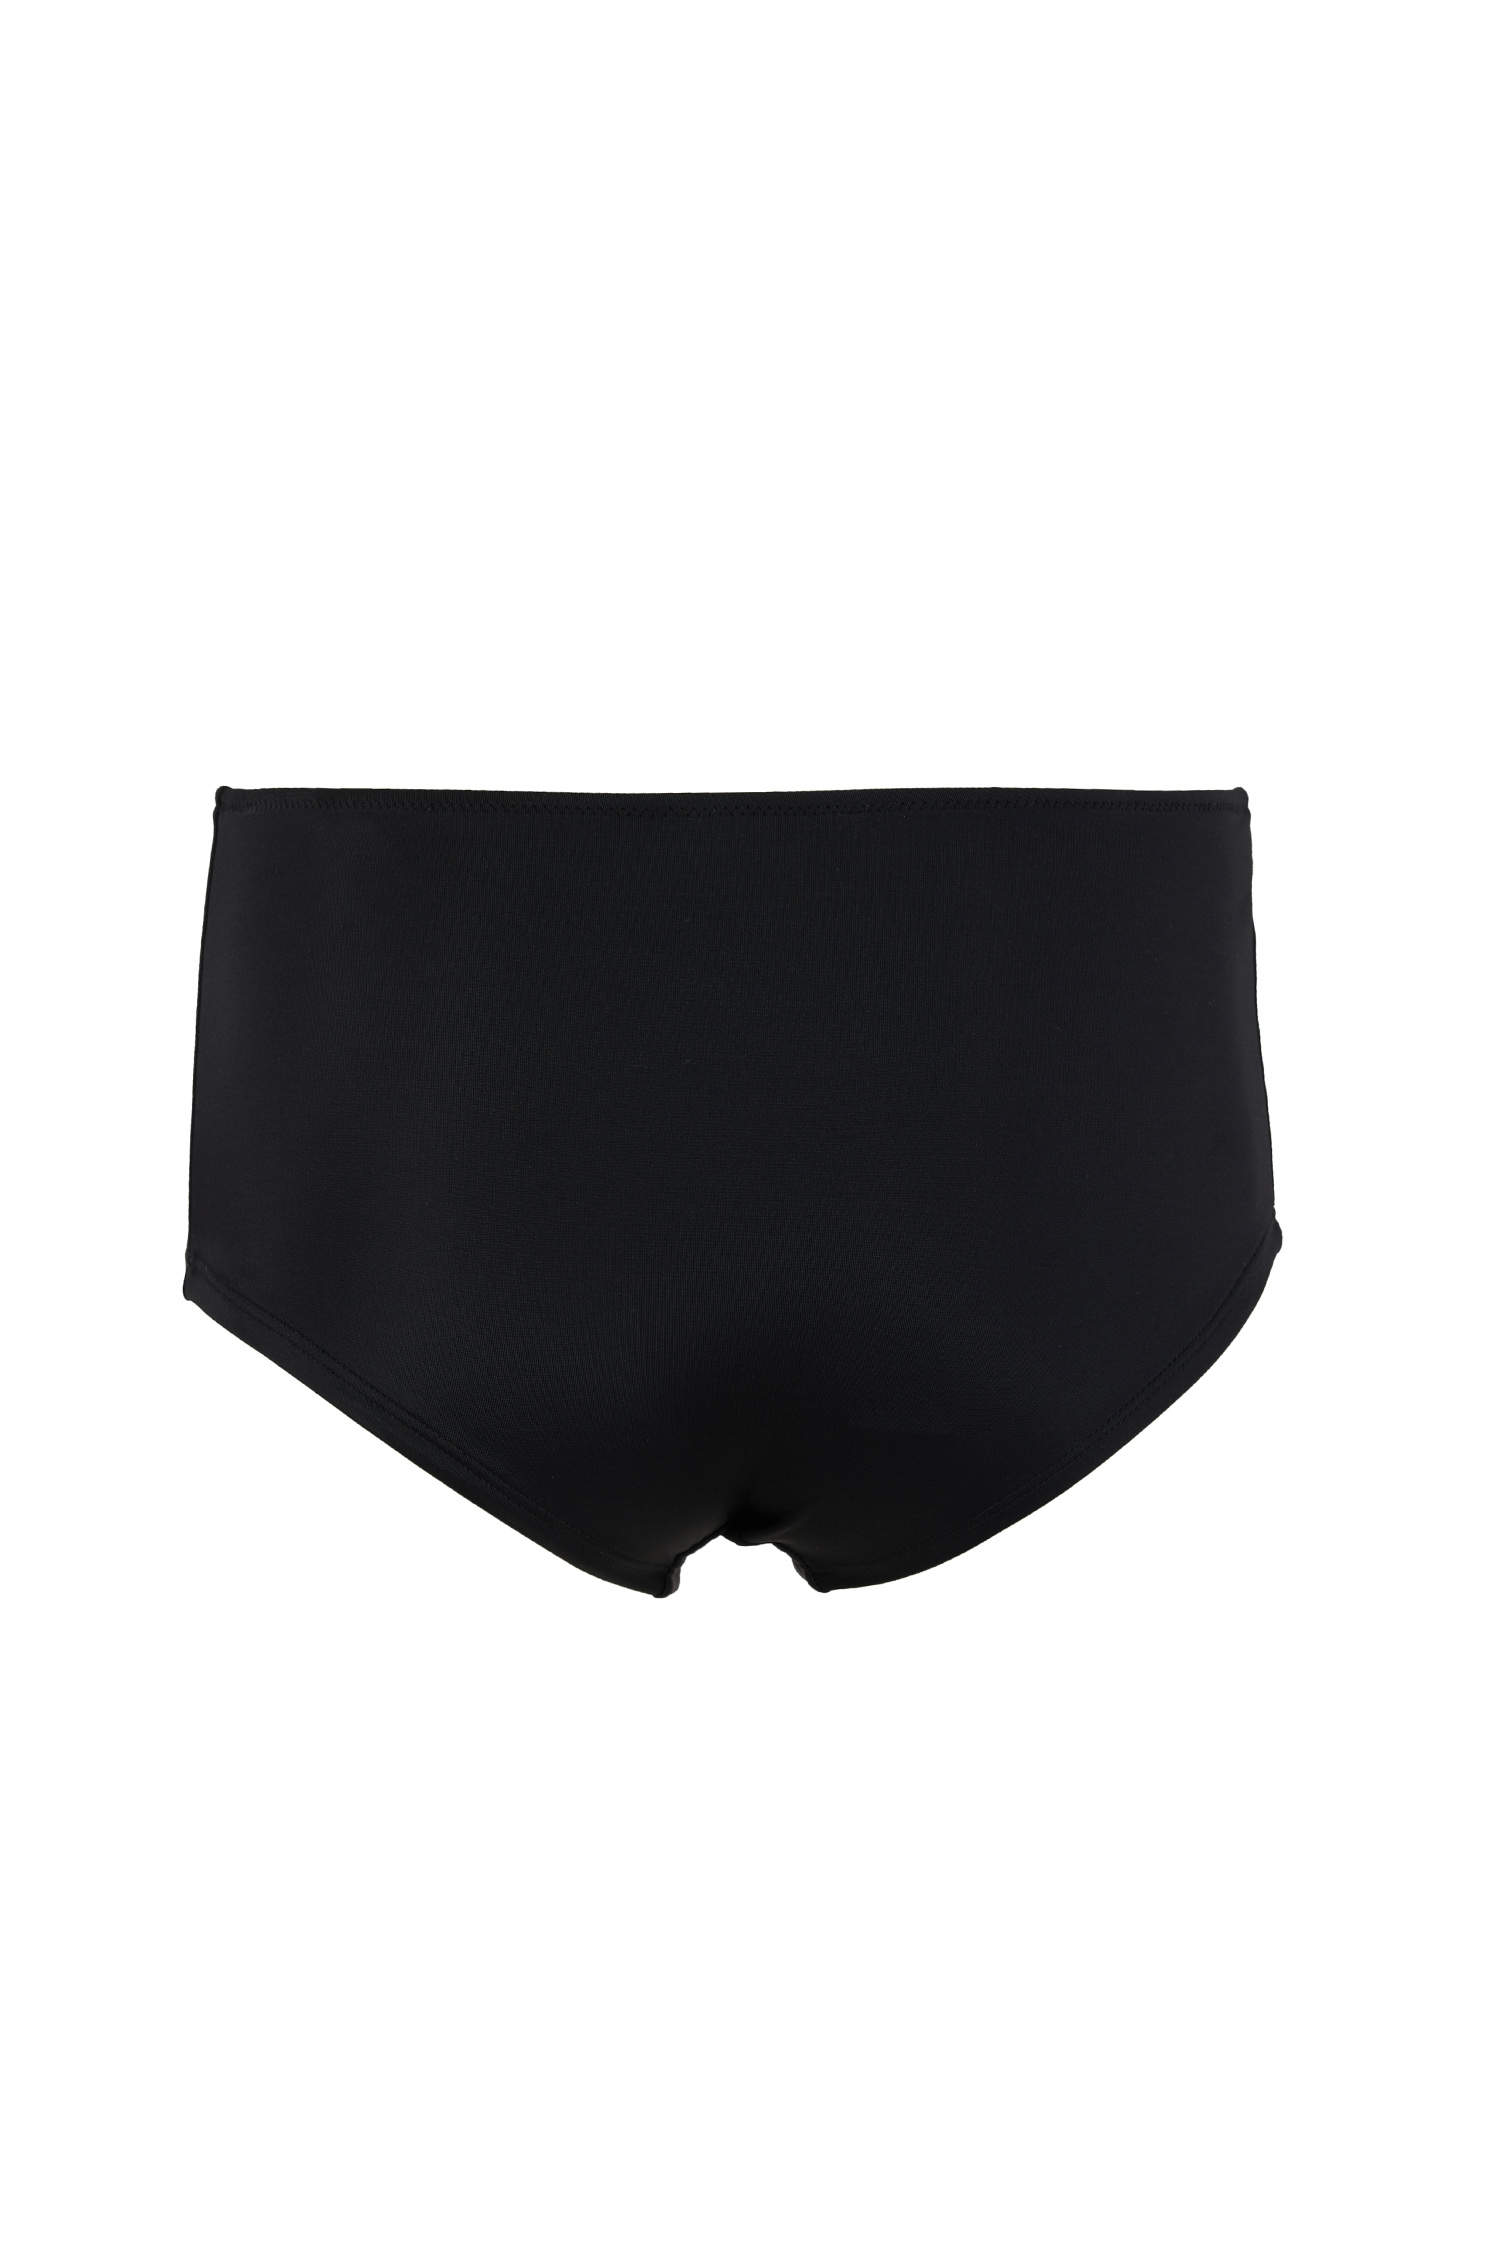 Black WOMAN Regular Fit Bikini Bottom 2417835 | DeFacto